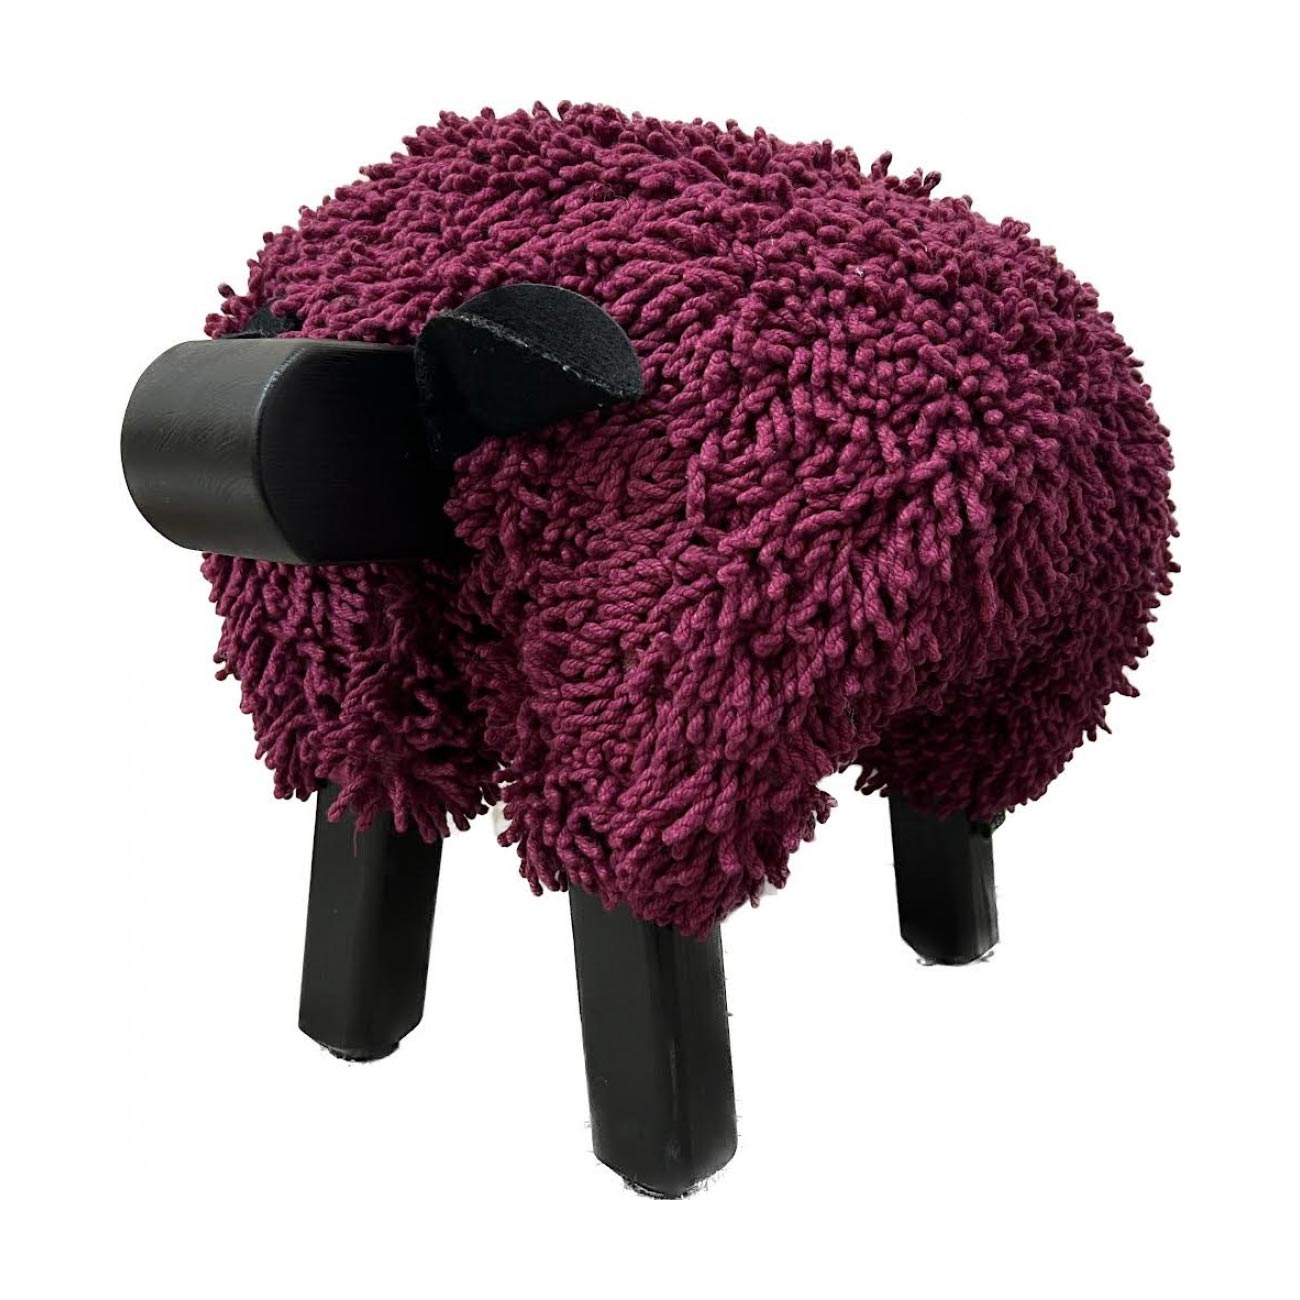 Foot Rest - Welsh Sheep - Original Ewemoo - Bright Colours - Handmade